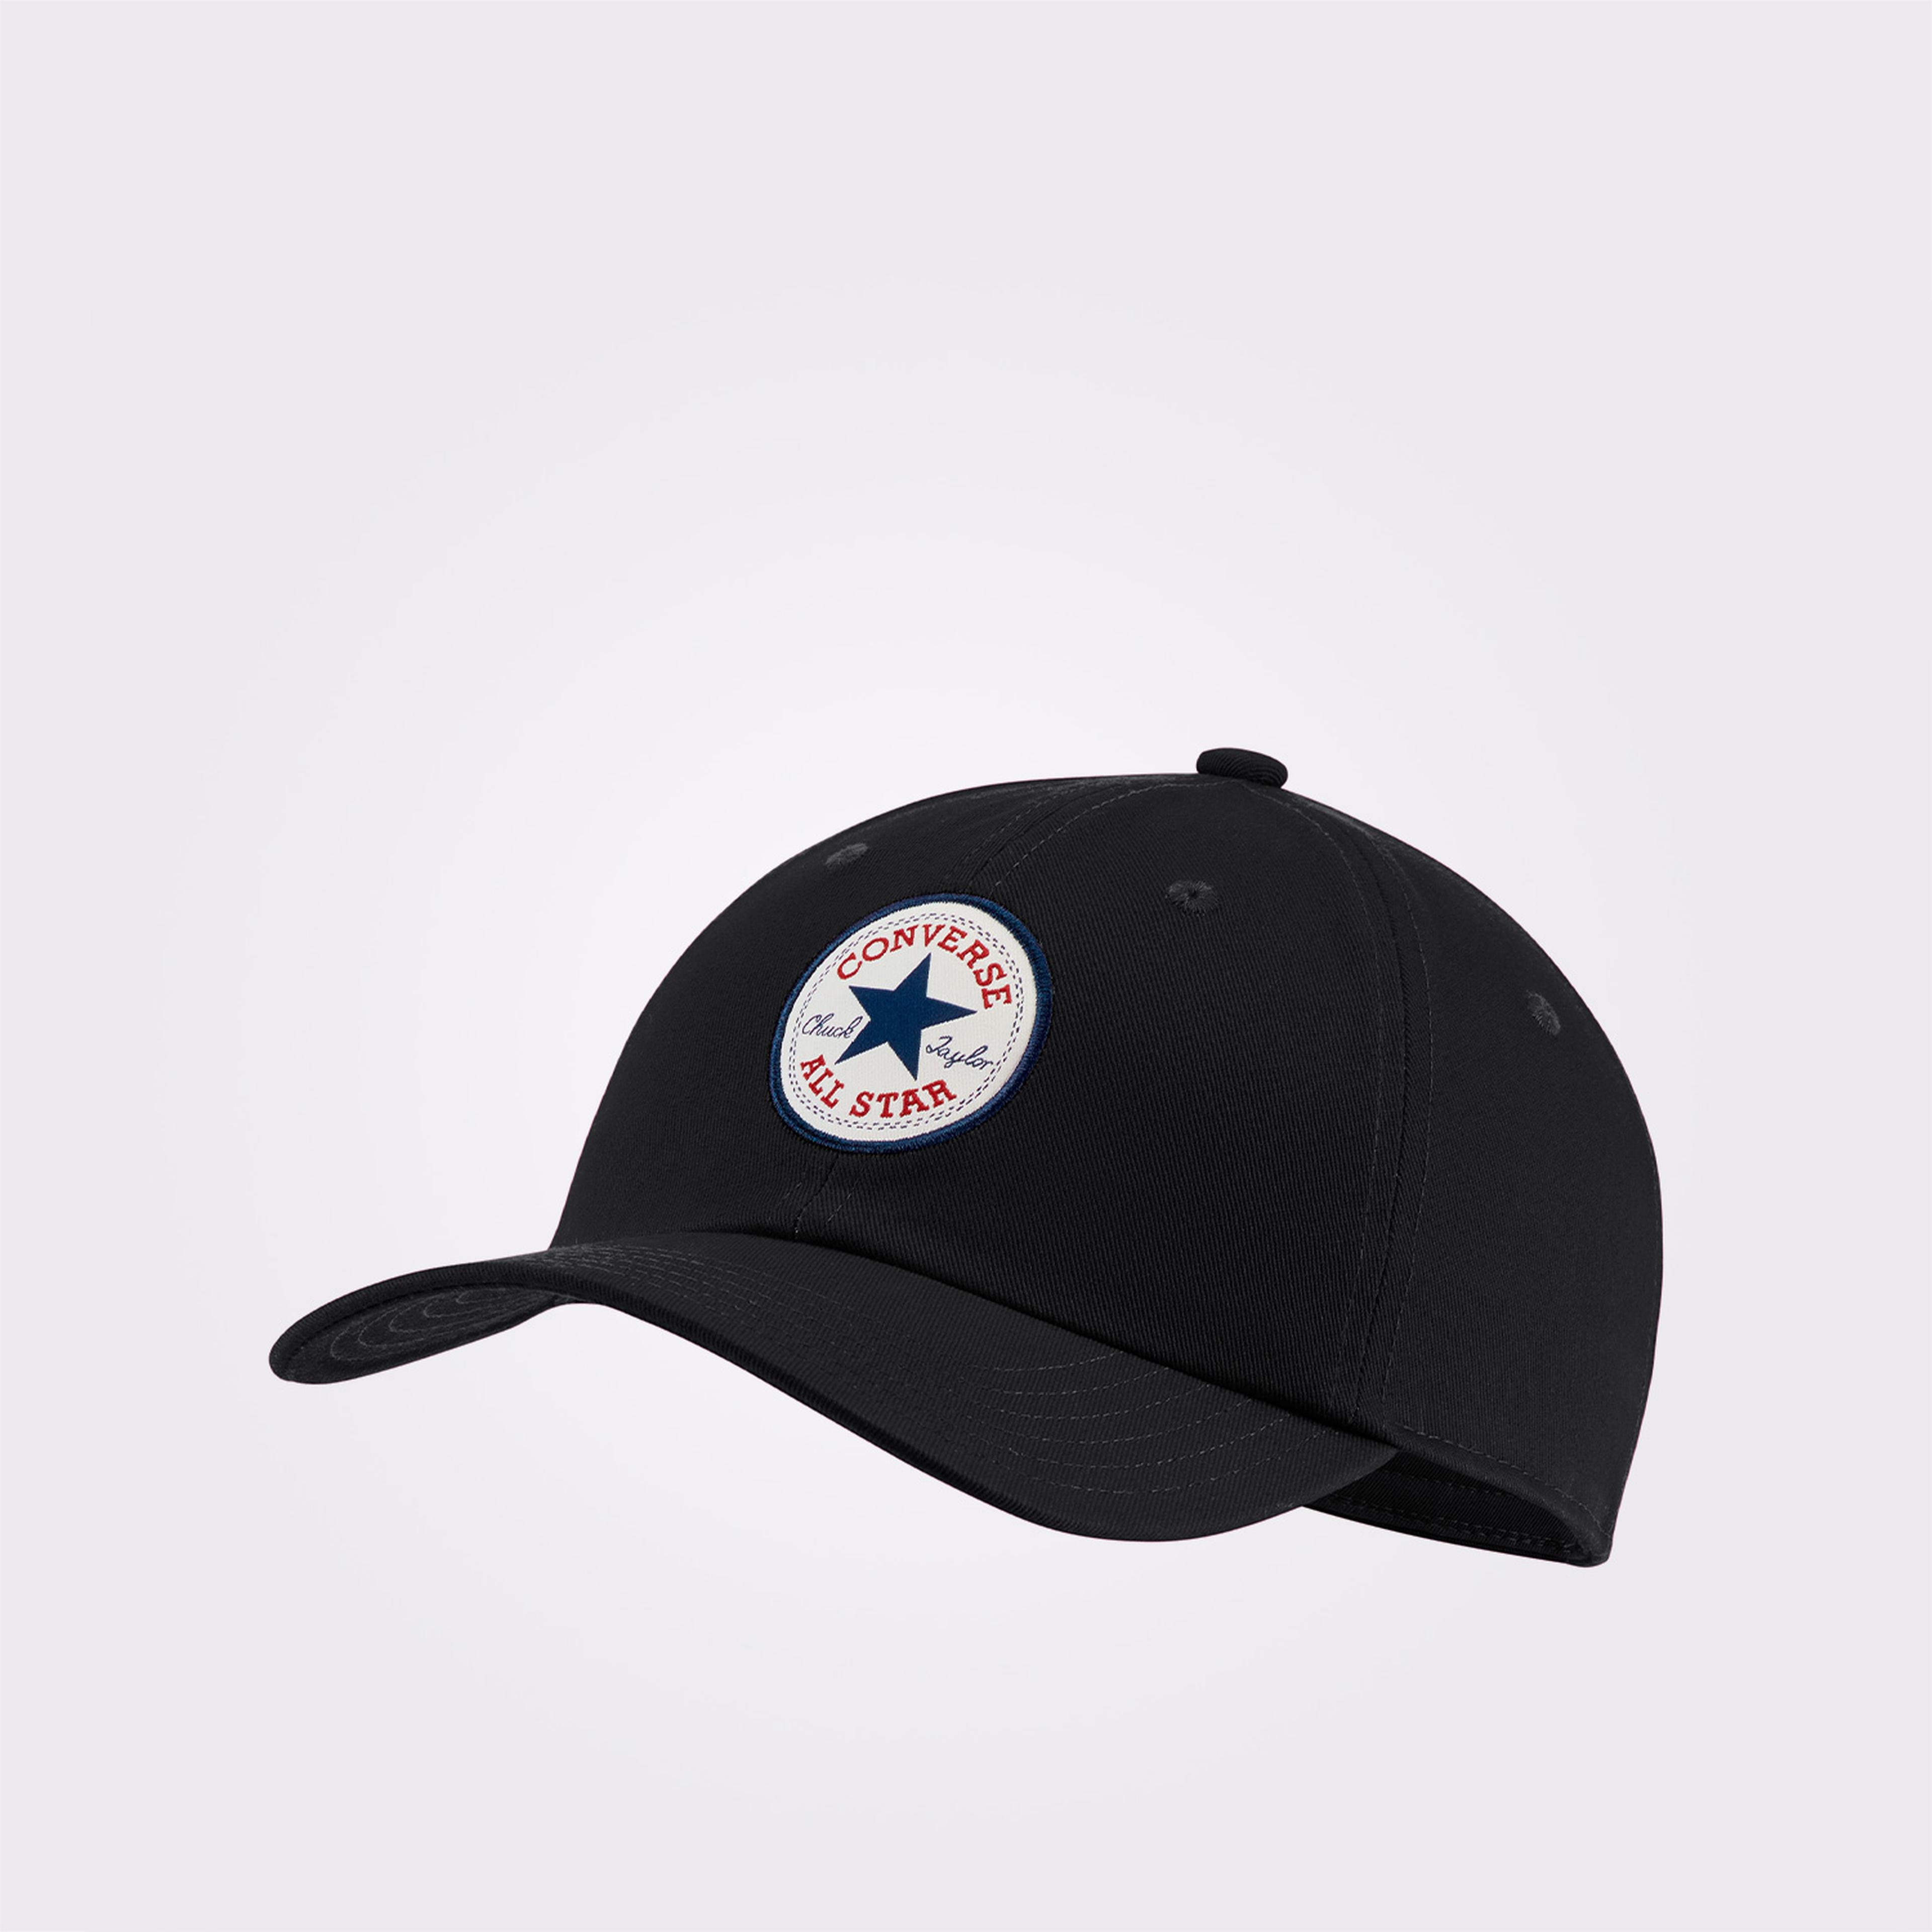 Converse Tipoff Baseball Cap Unisex Siyah Şapka